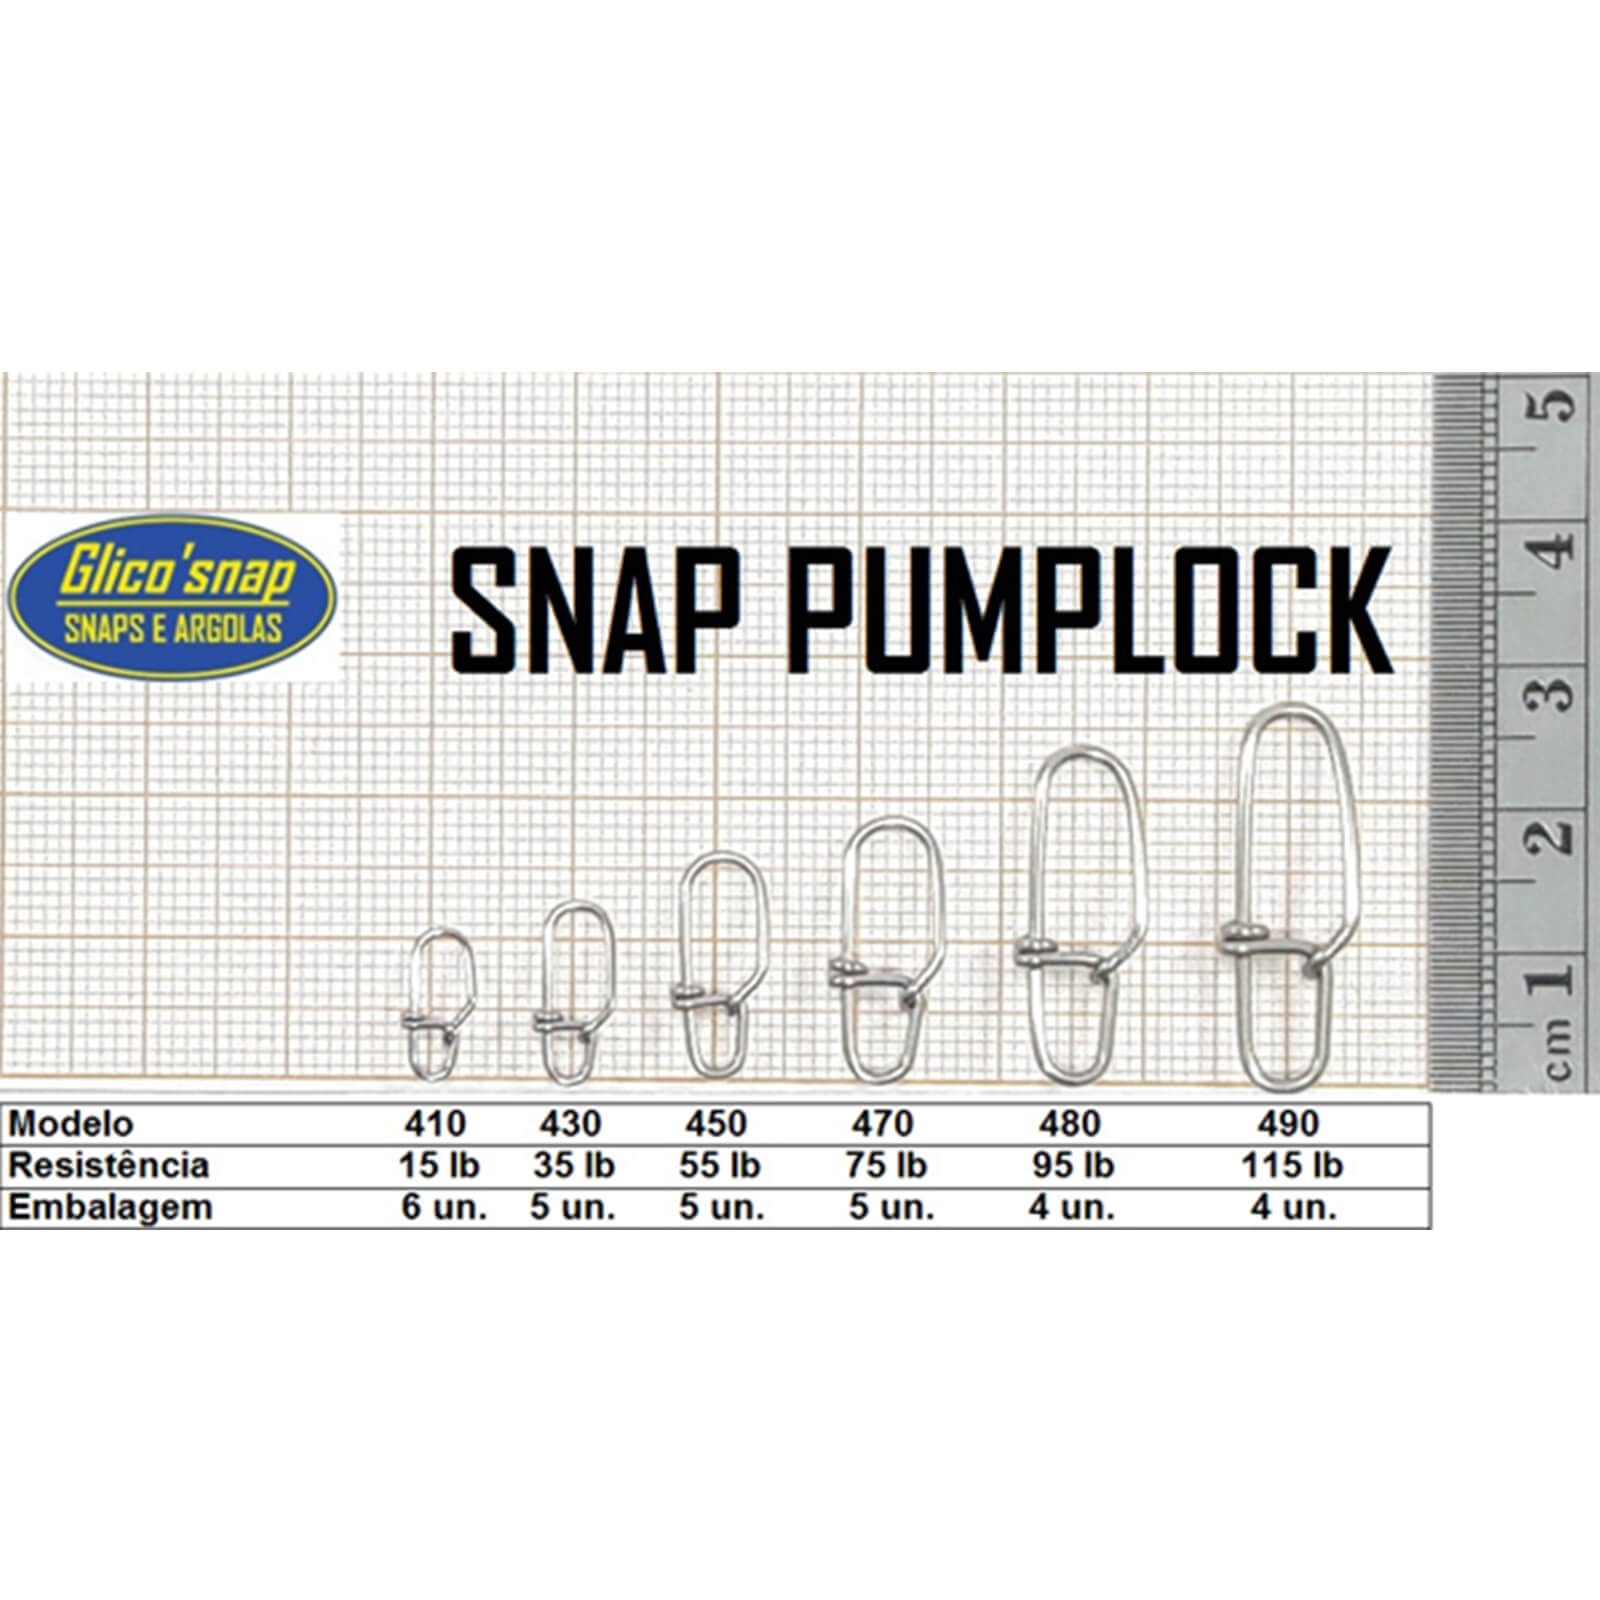 Snap Pumplock Glico'Snap Mod. 470 75lb 5pç